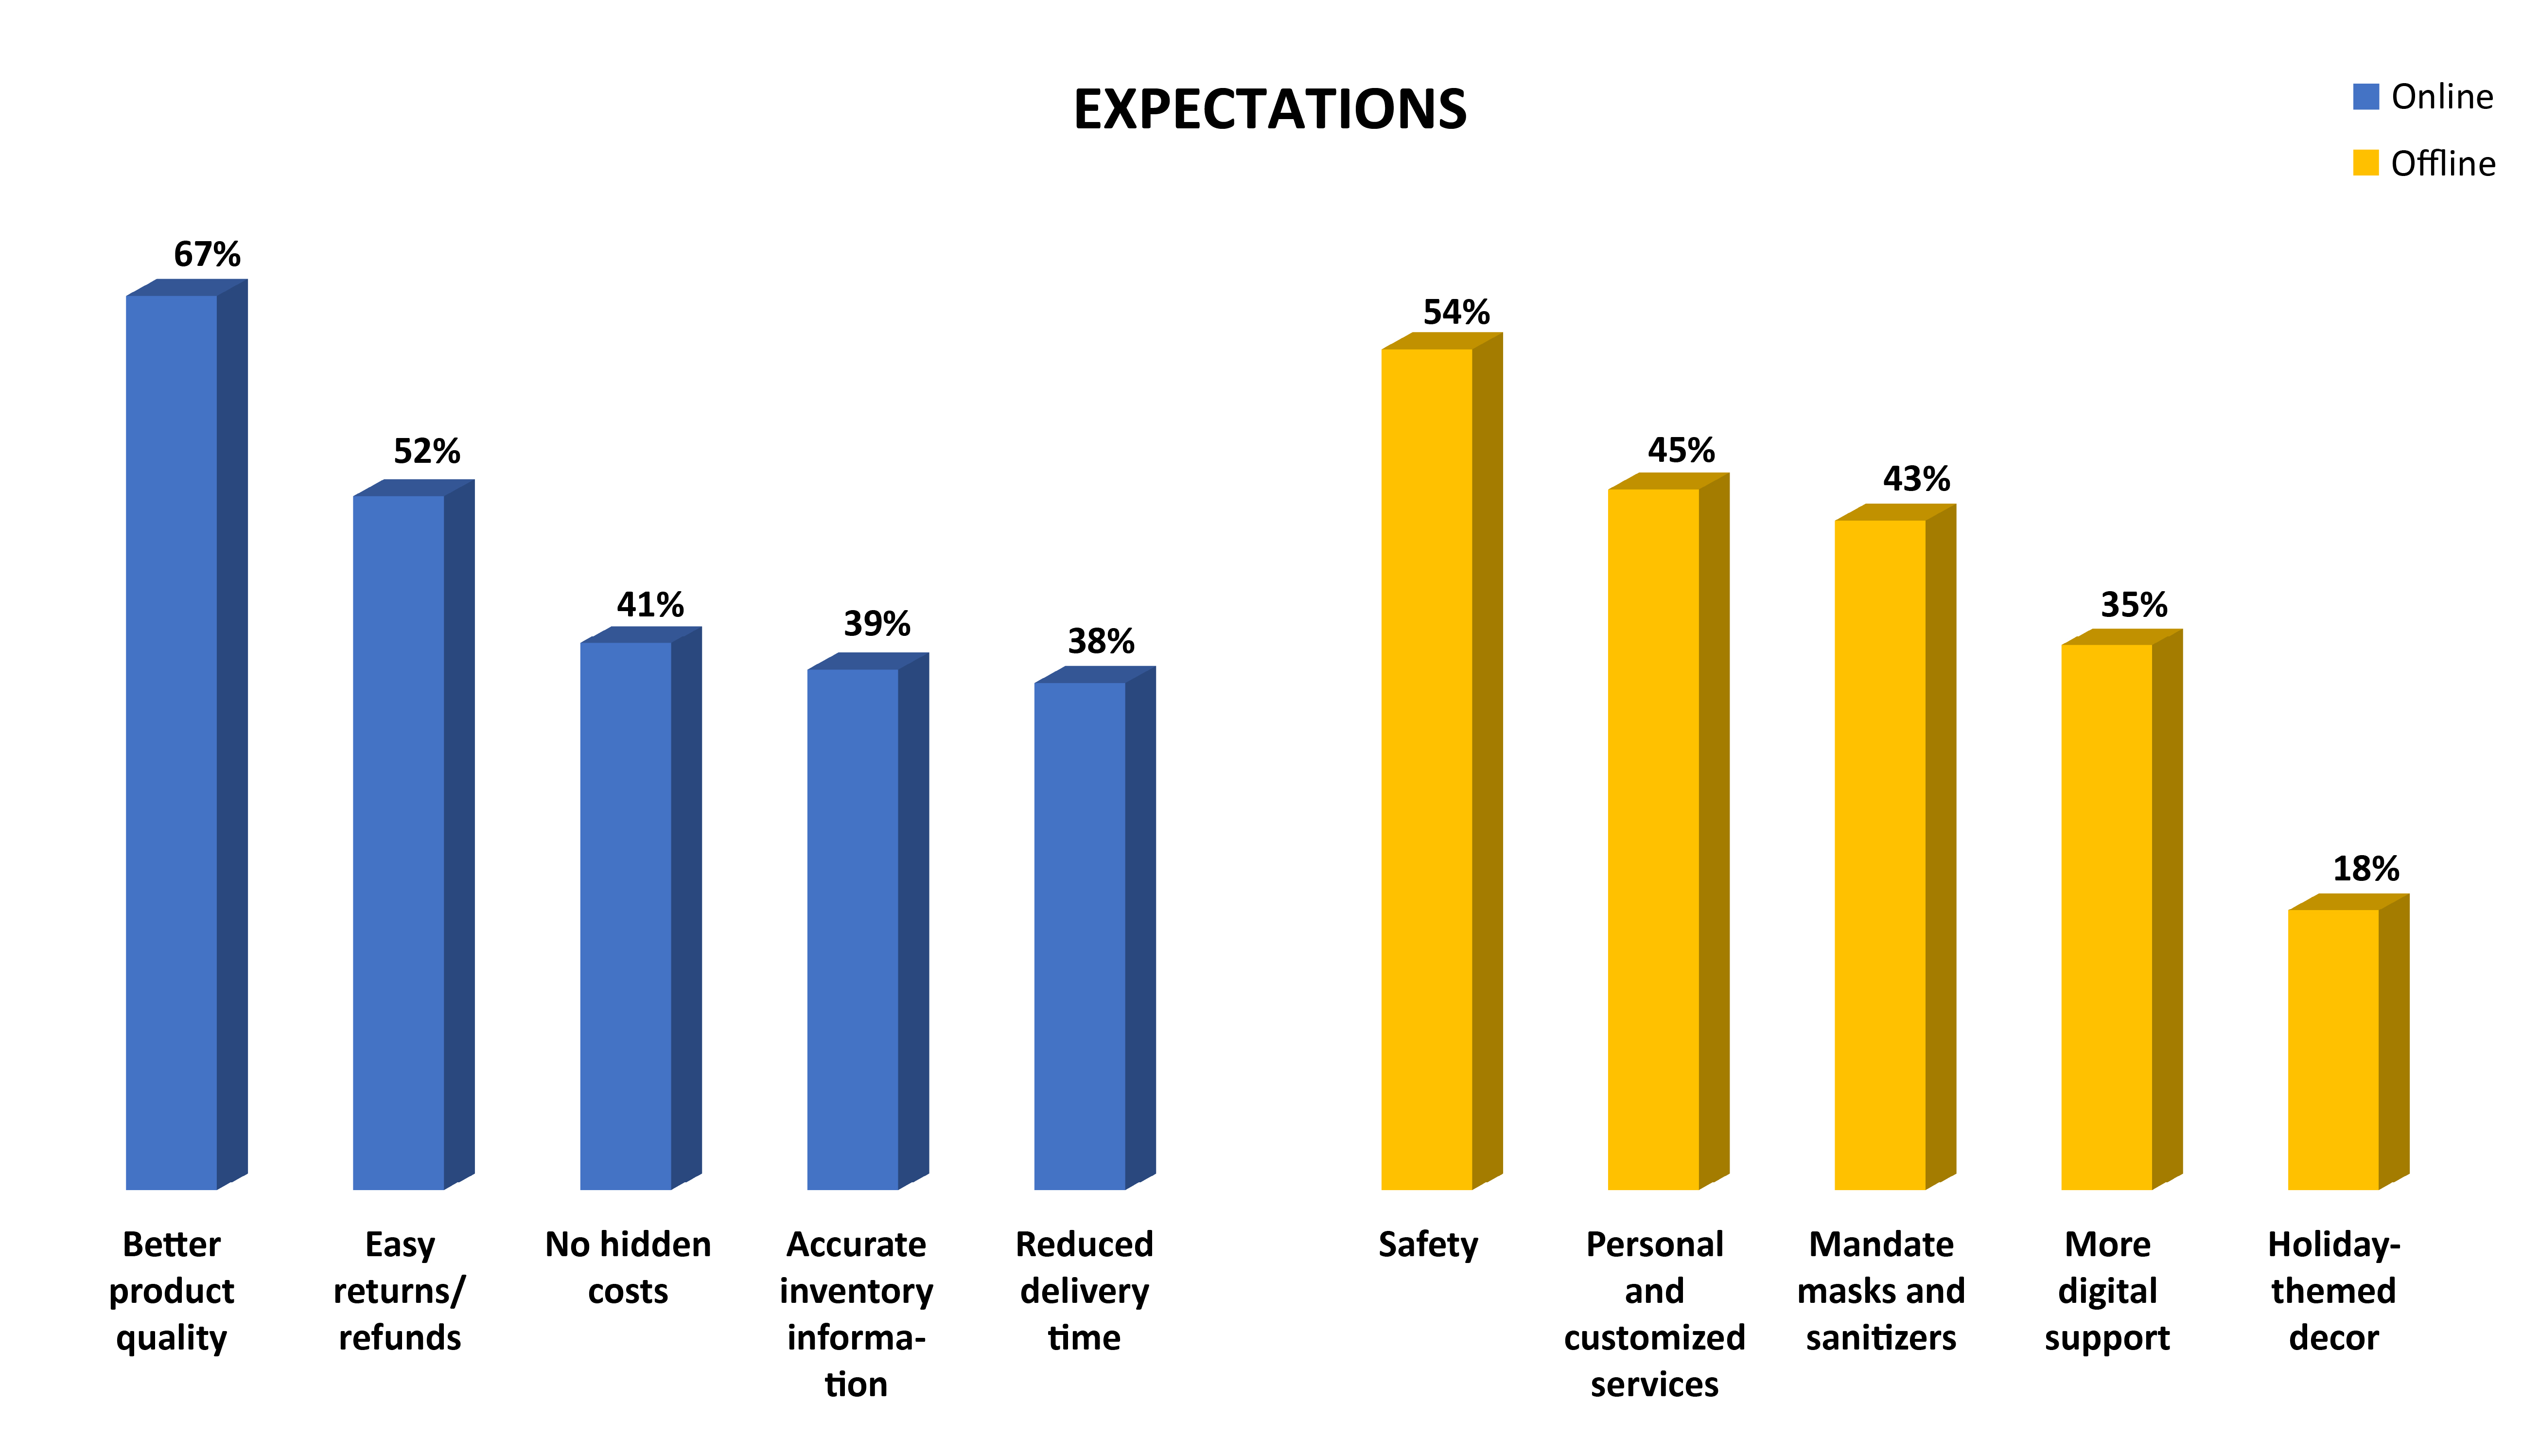 Hybrid Model of Shopping Expectations